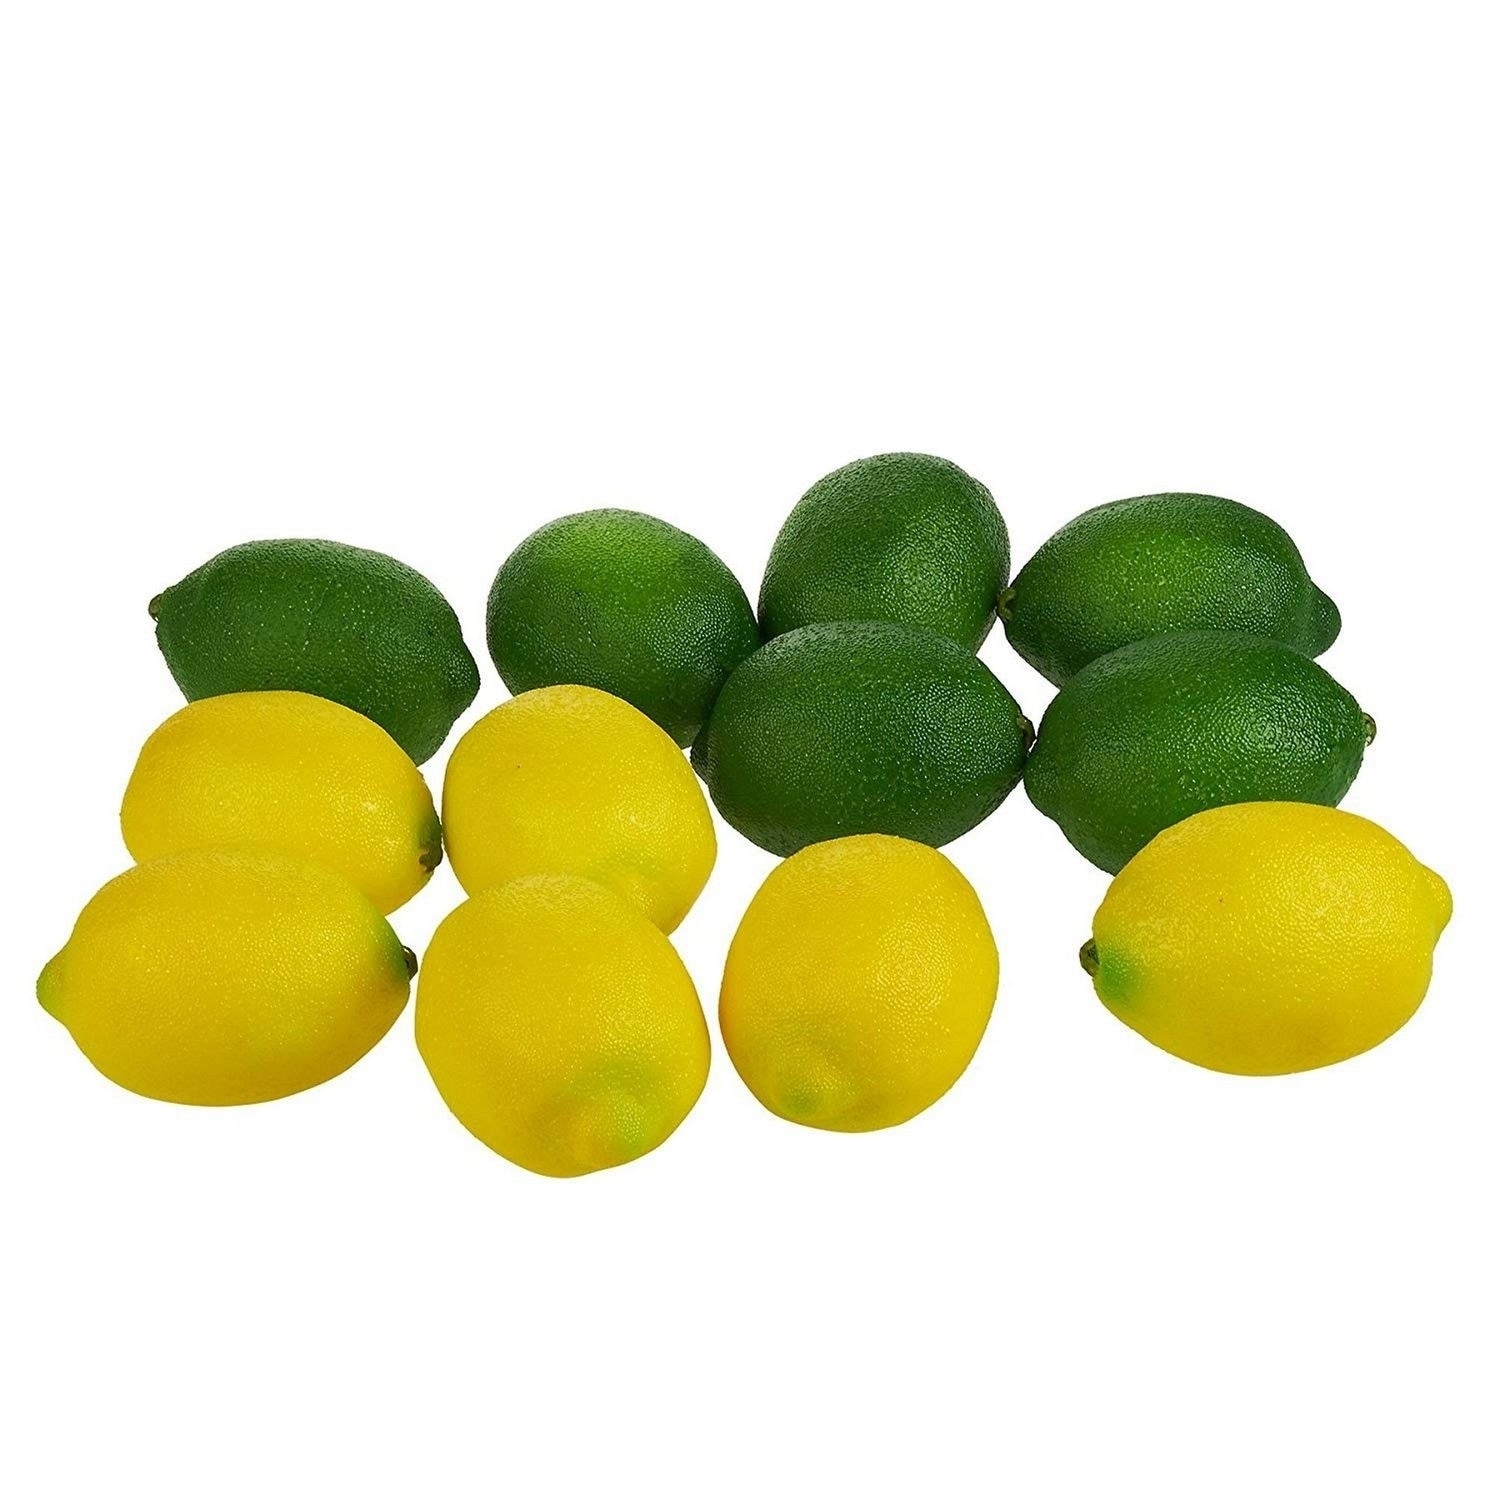 6pcs Artificial Limes Lemons Fake Fruit Realistic Imitation Home Decor 